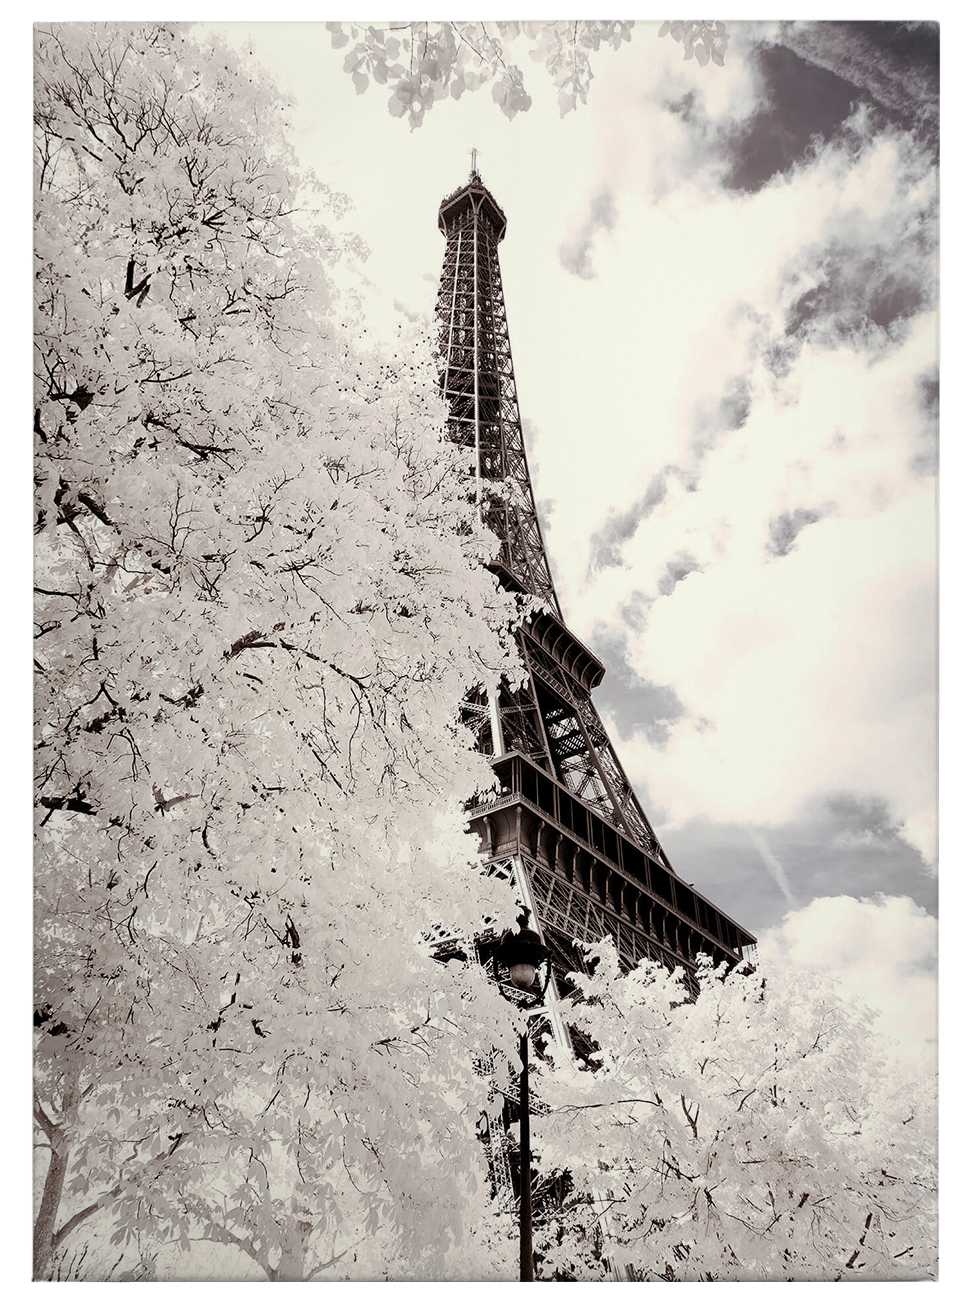             Cuadro Torre Eiffel en primavera, foto de Hugonnard - 0,50 m x 0,70 m
        